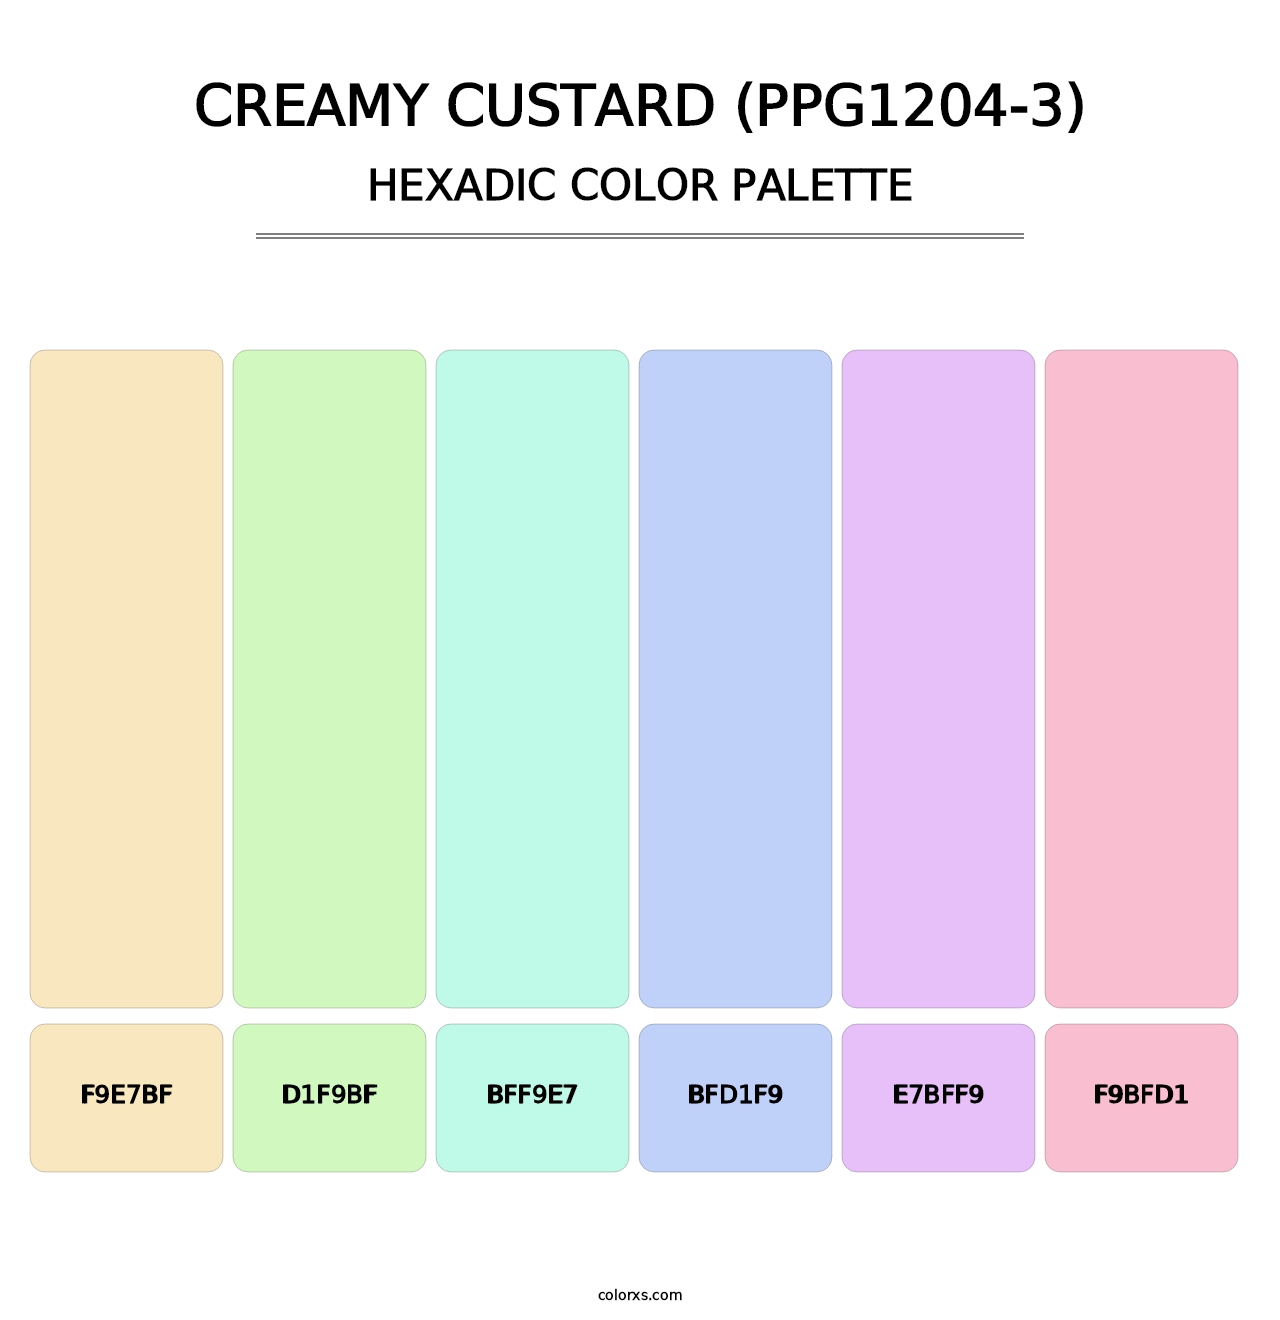 Creamy Custard (PPG1204-3) - Hexadic Color Palette